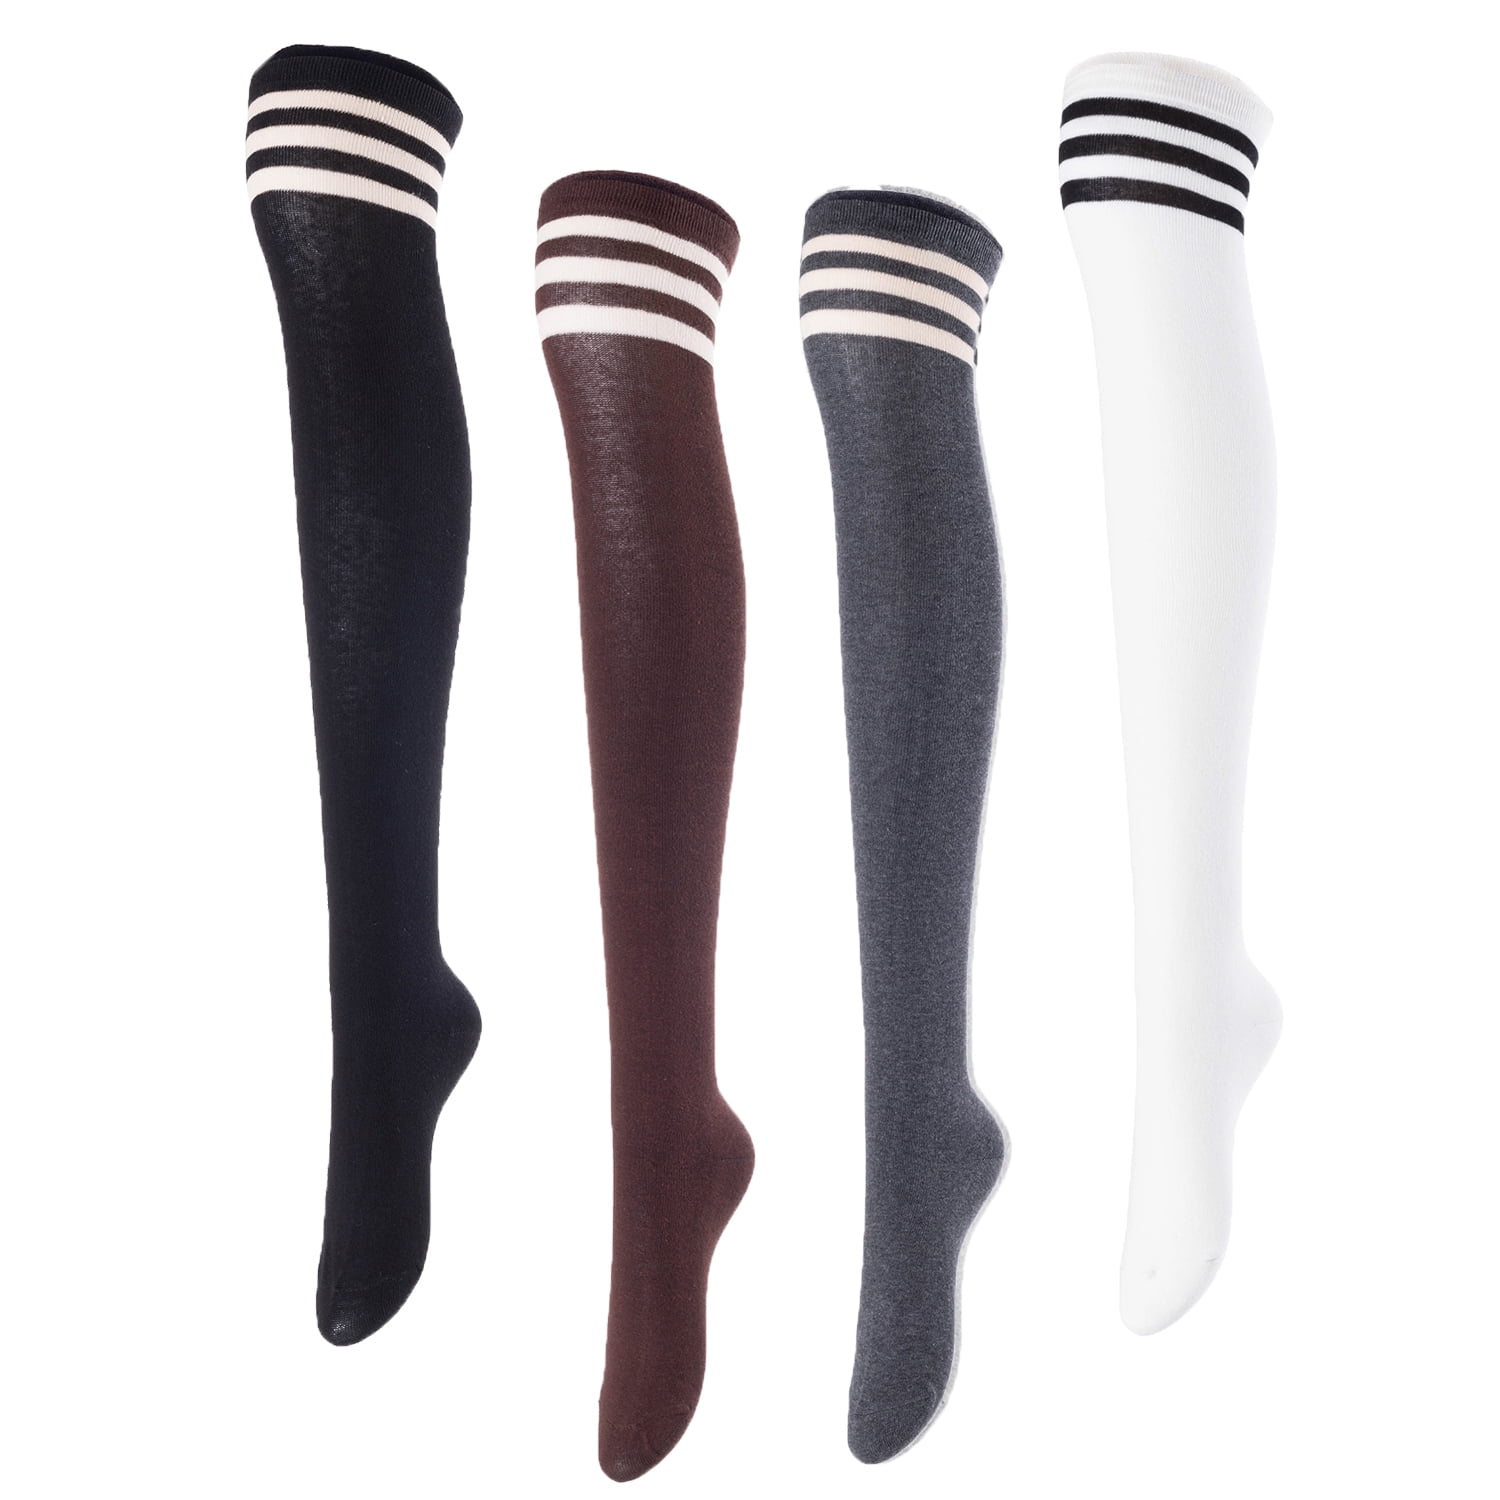 Meso - Meso Women's Big Girl's 4 Pairs Splendid Knee High Cotton Socks ...